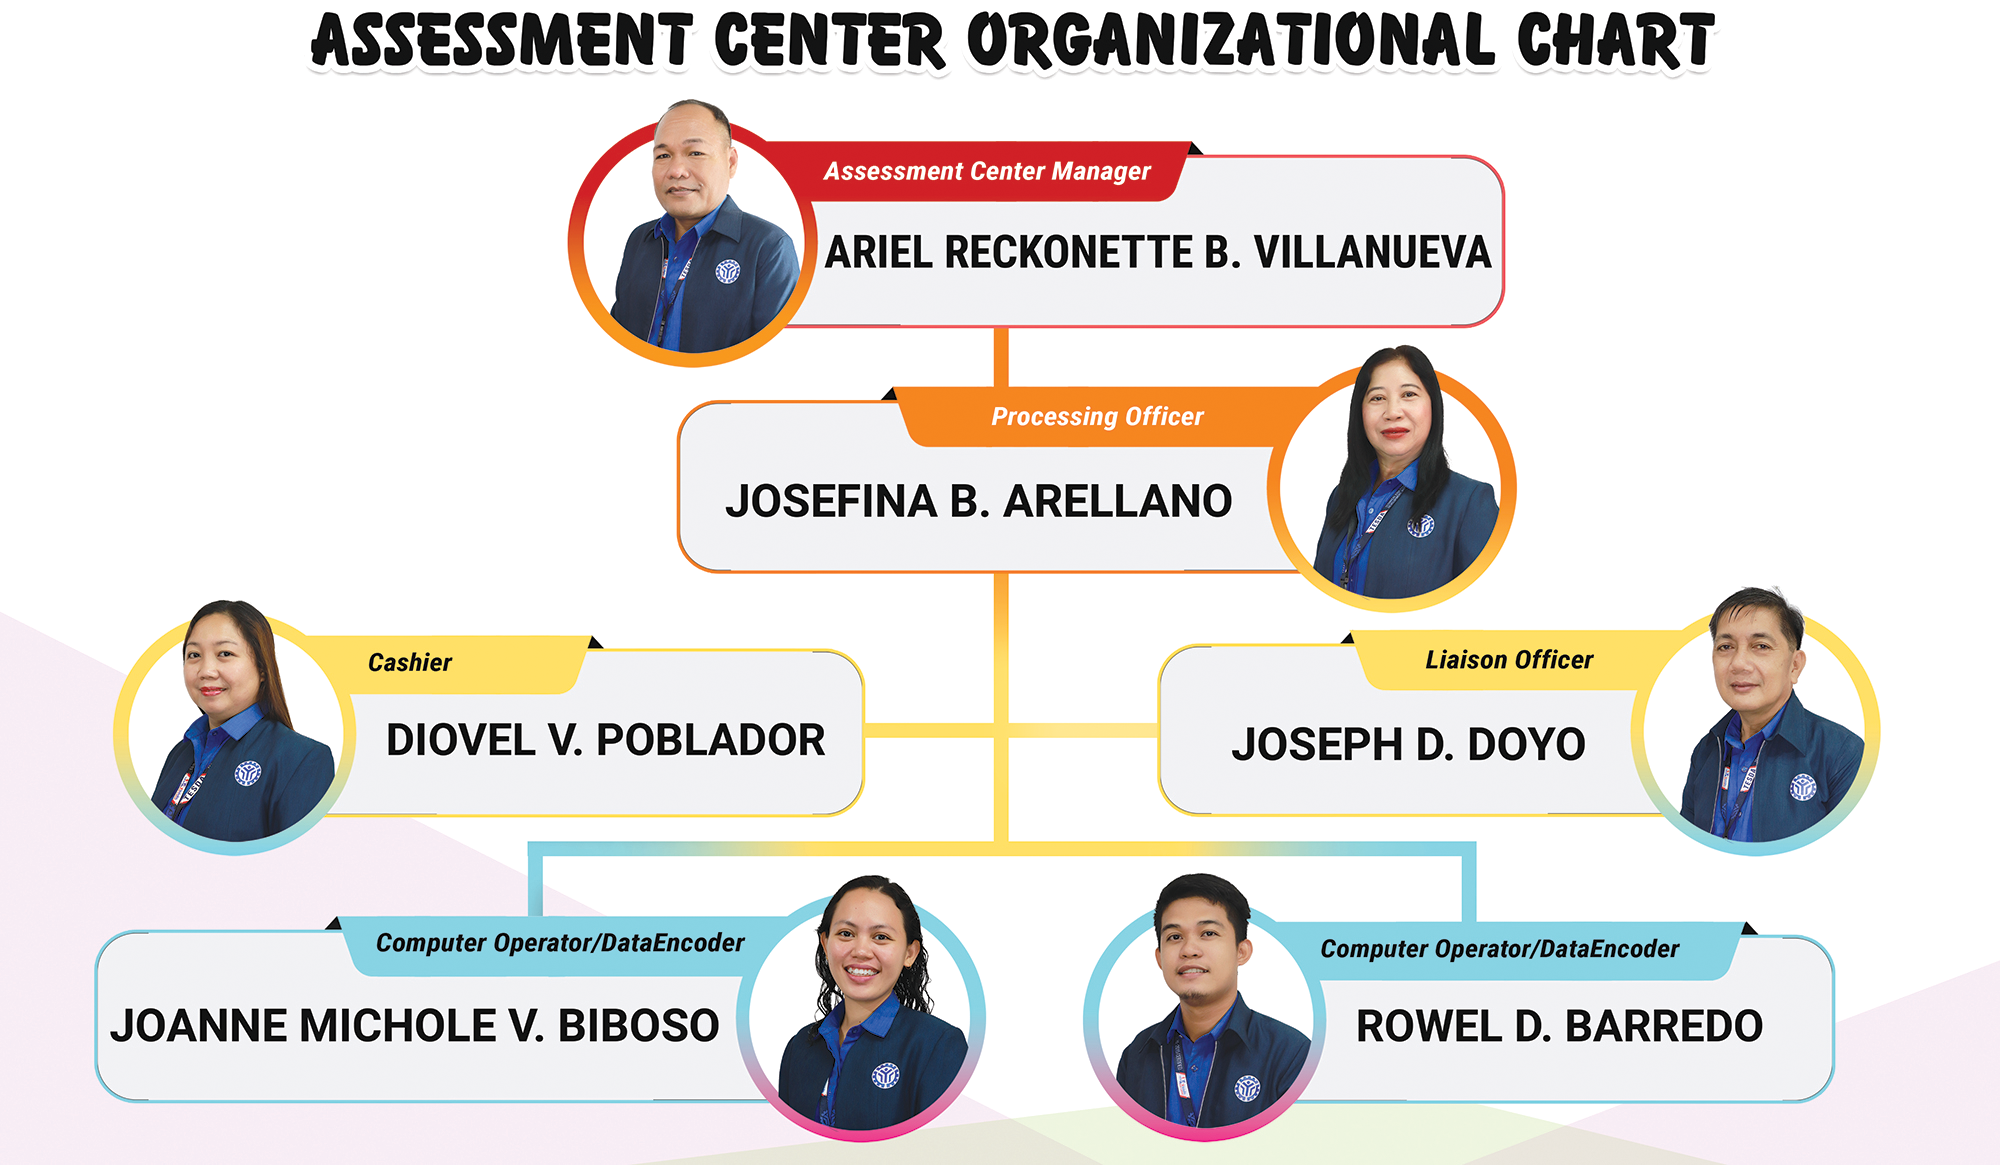 Assessment Center Organizational Chart. Assessment Center Manager (Ariel Reckonette B. Villanueva), Processing Officer ( Josefina B. Arellano), Cashier ( DIovel V. Poblador), Liaison Officer (Joseph D. Doyo), Data Encoder (Juana Michole V. Biboso and Rowel D. Barredo).